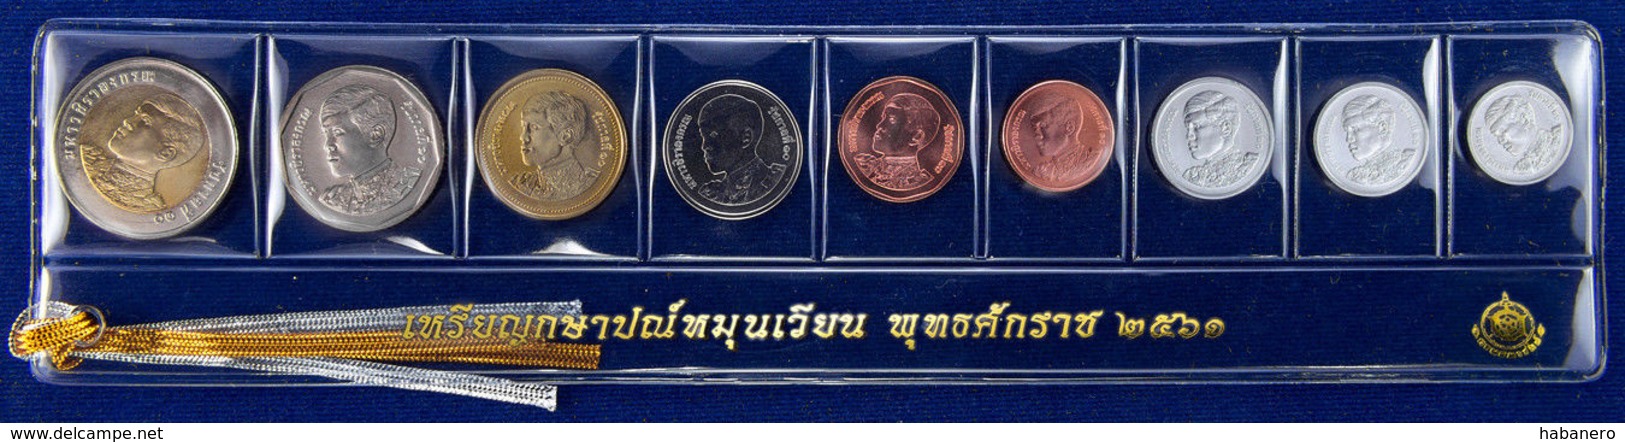 THAILAND 2018 9 COIN SET KING MAHA VAJIRALONGKORN UNC MINT SCARCE SET WITH 1, 5, 10 SATANG - Tailandia